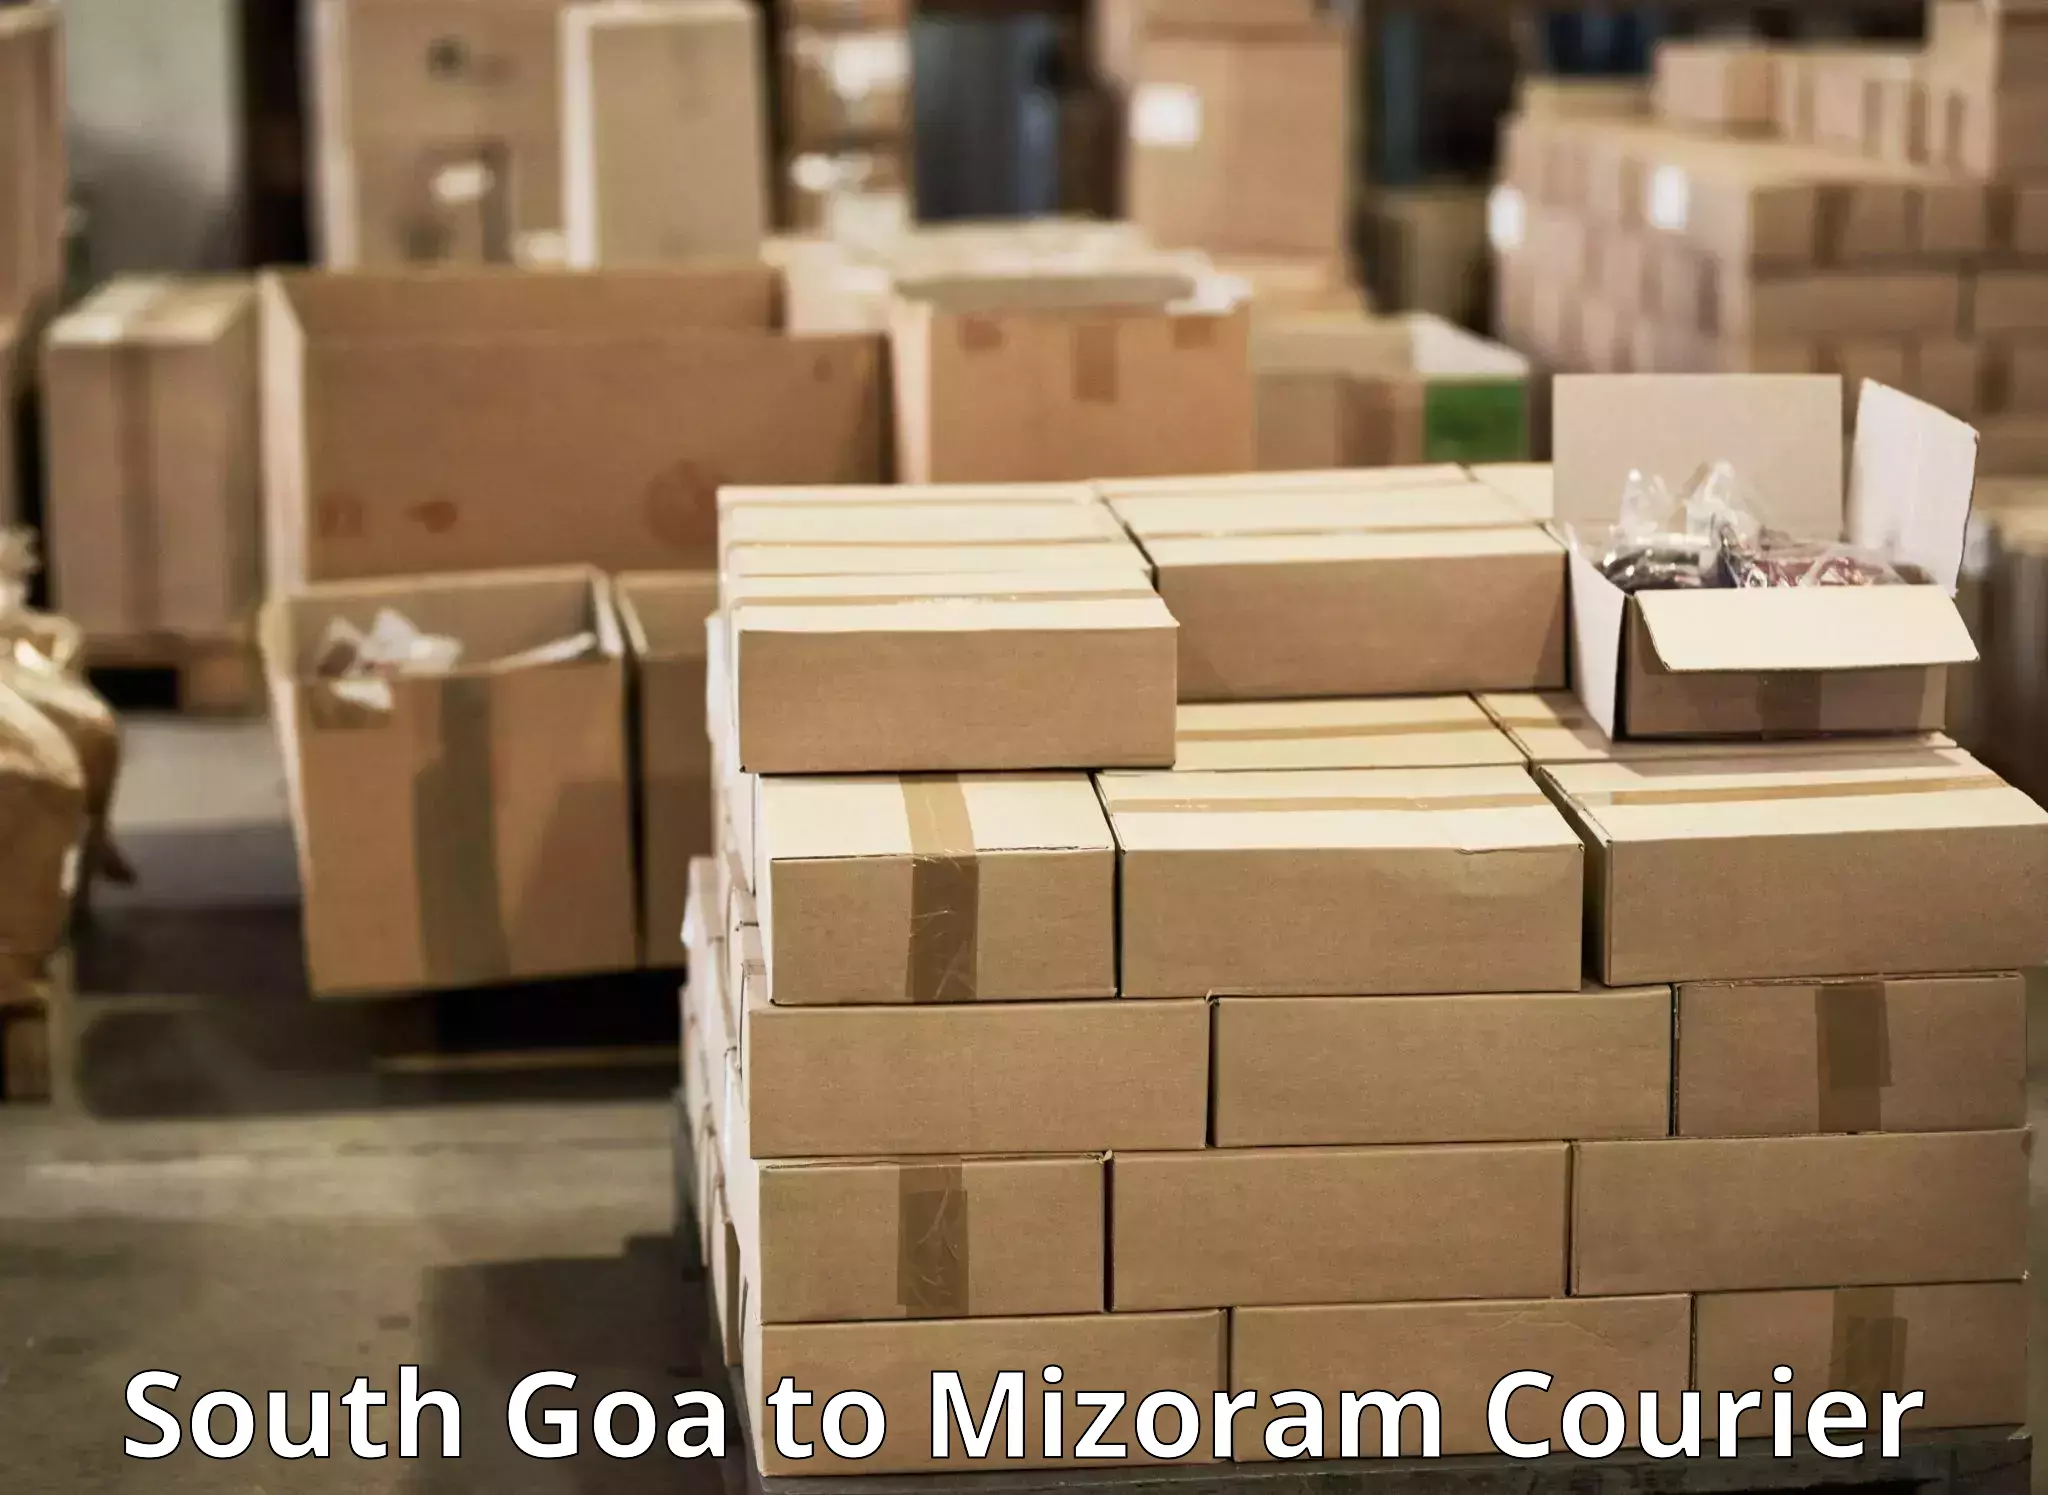 Advanced shipping network South Goa to Mizoram